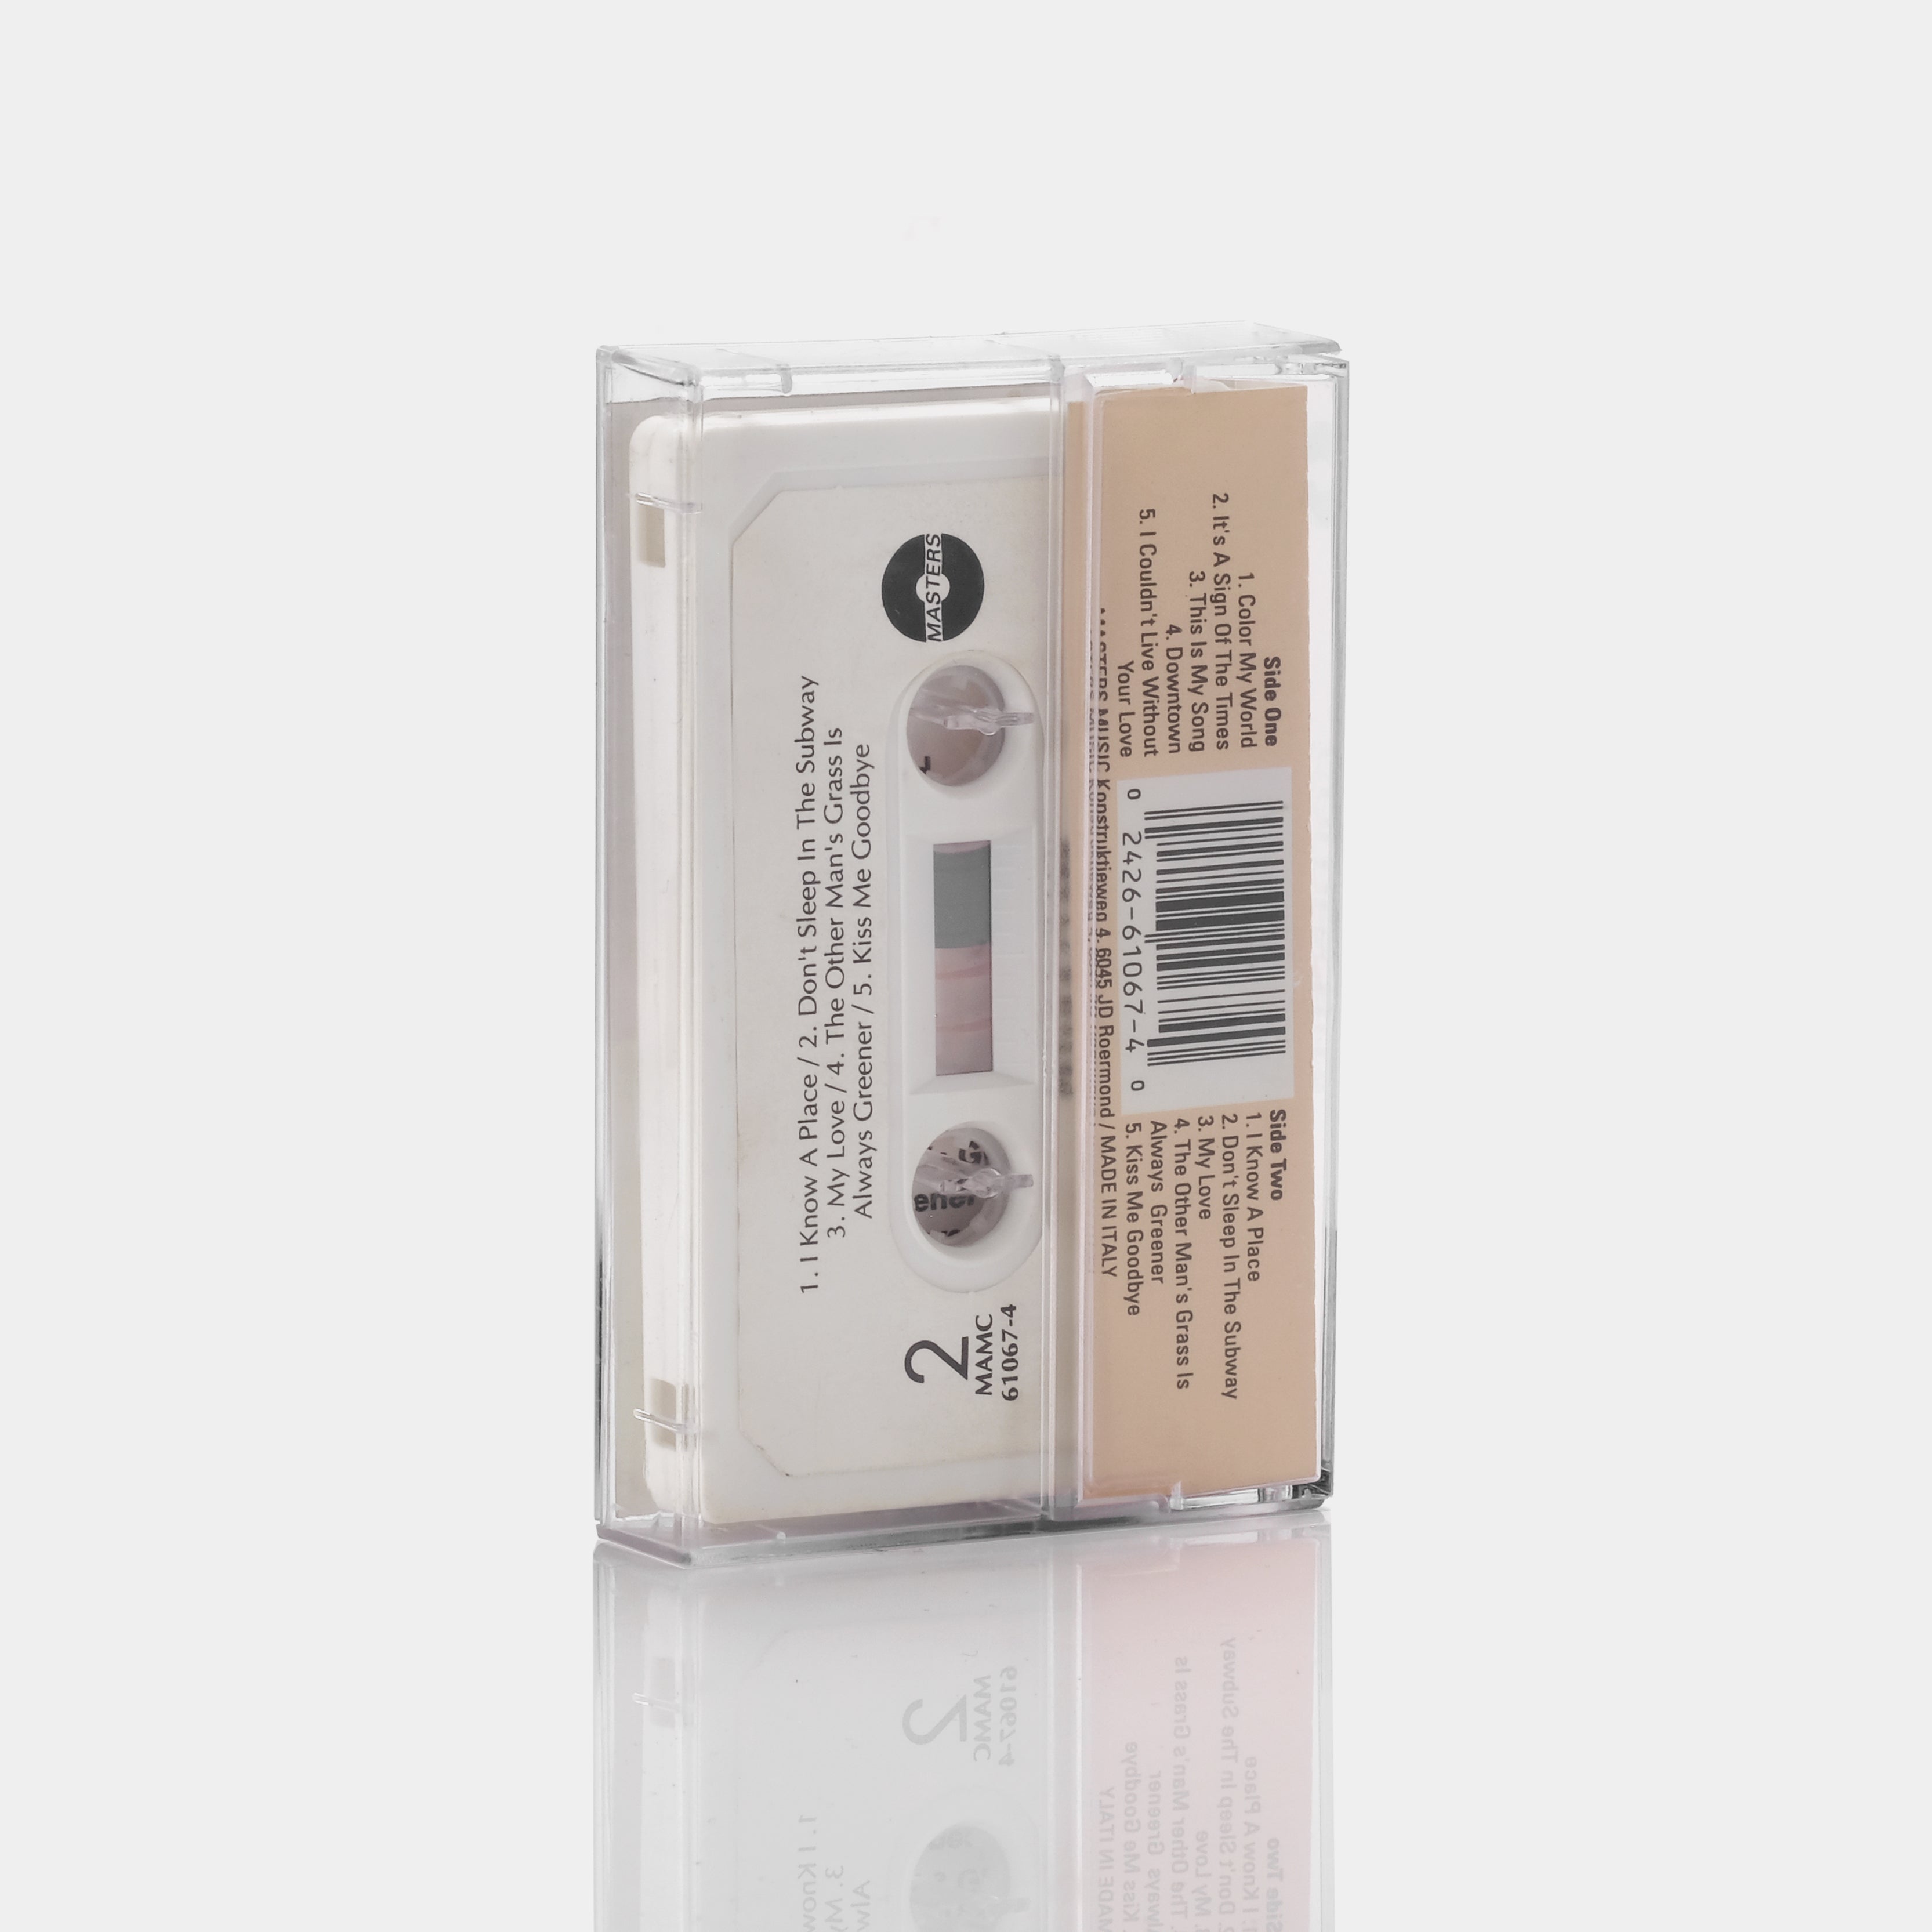 Petula Clark - Golden Hits Cassette Tape